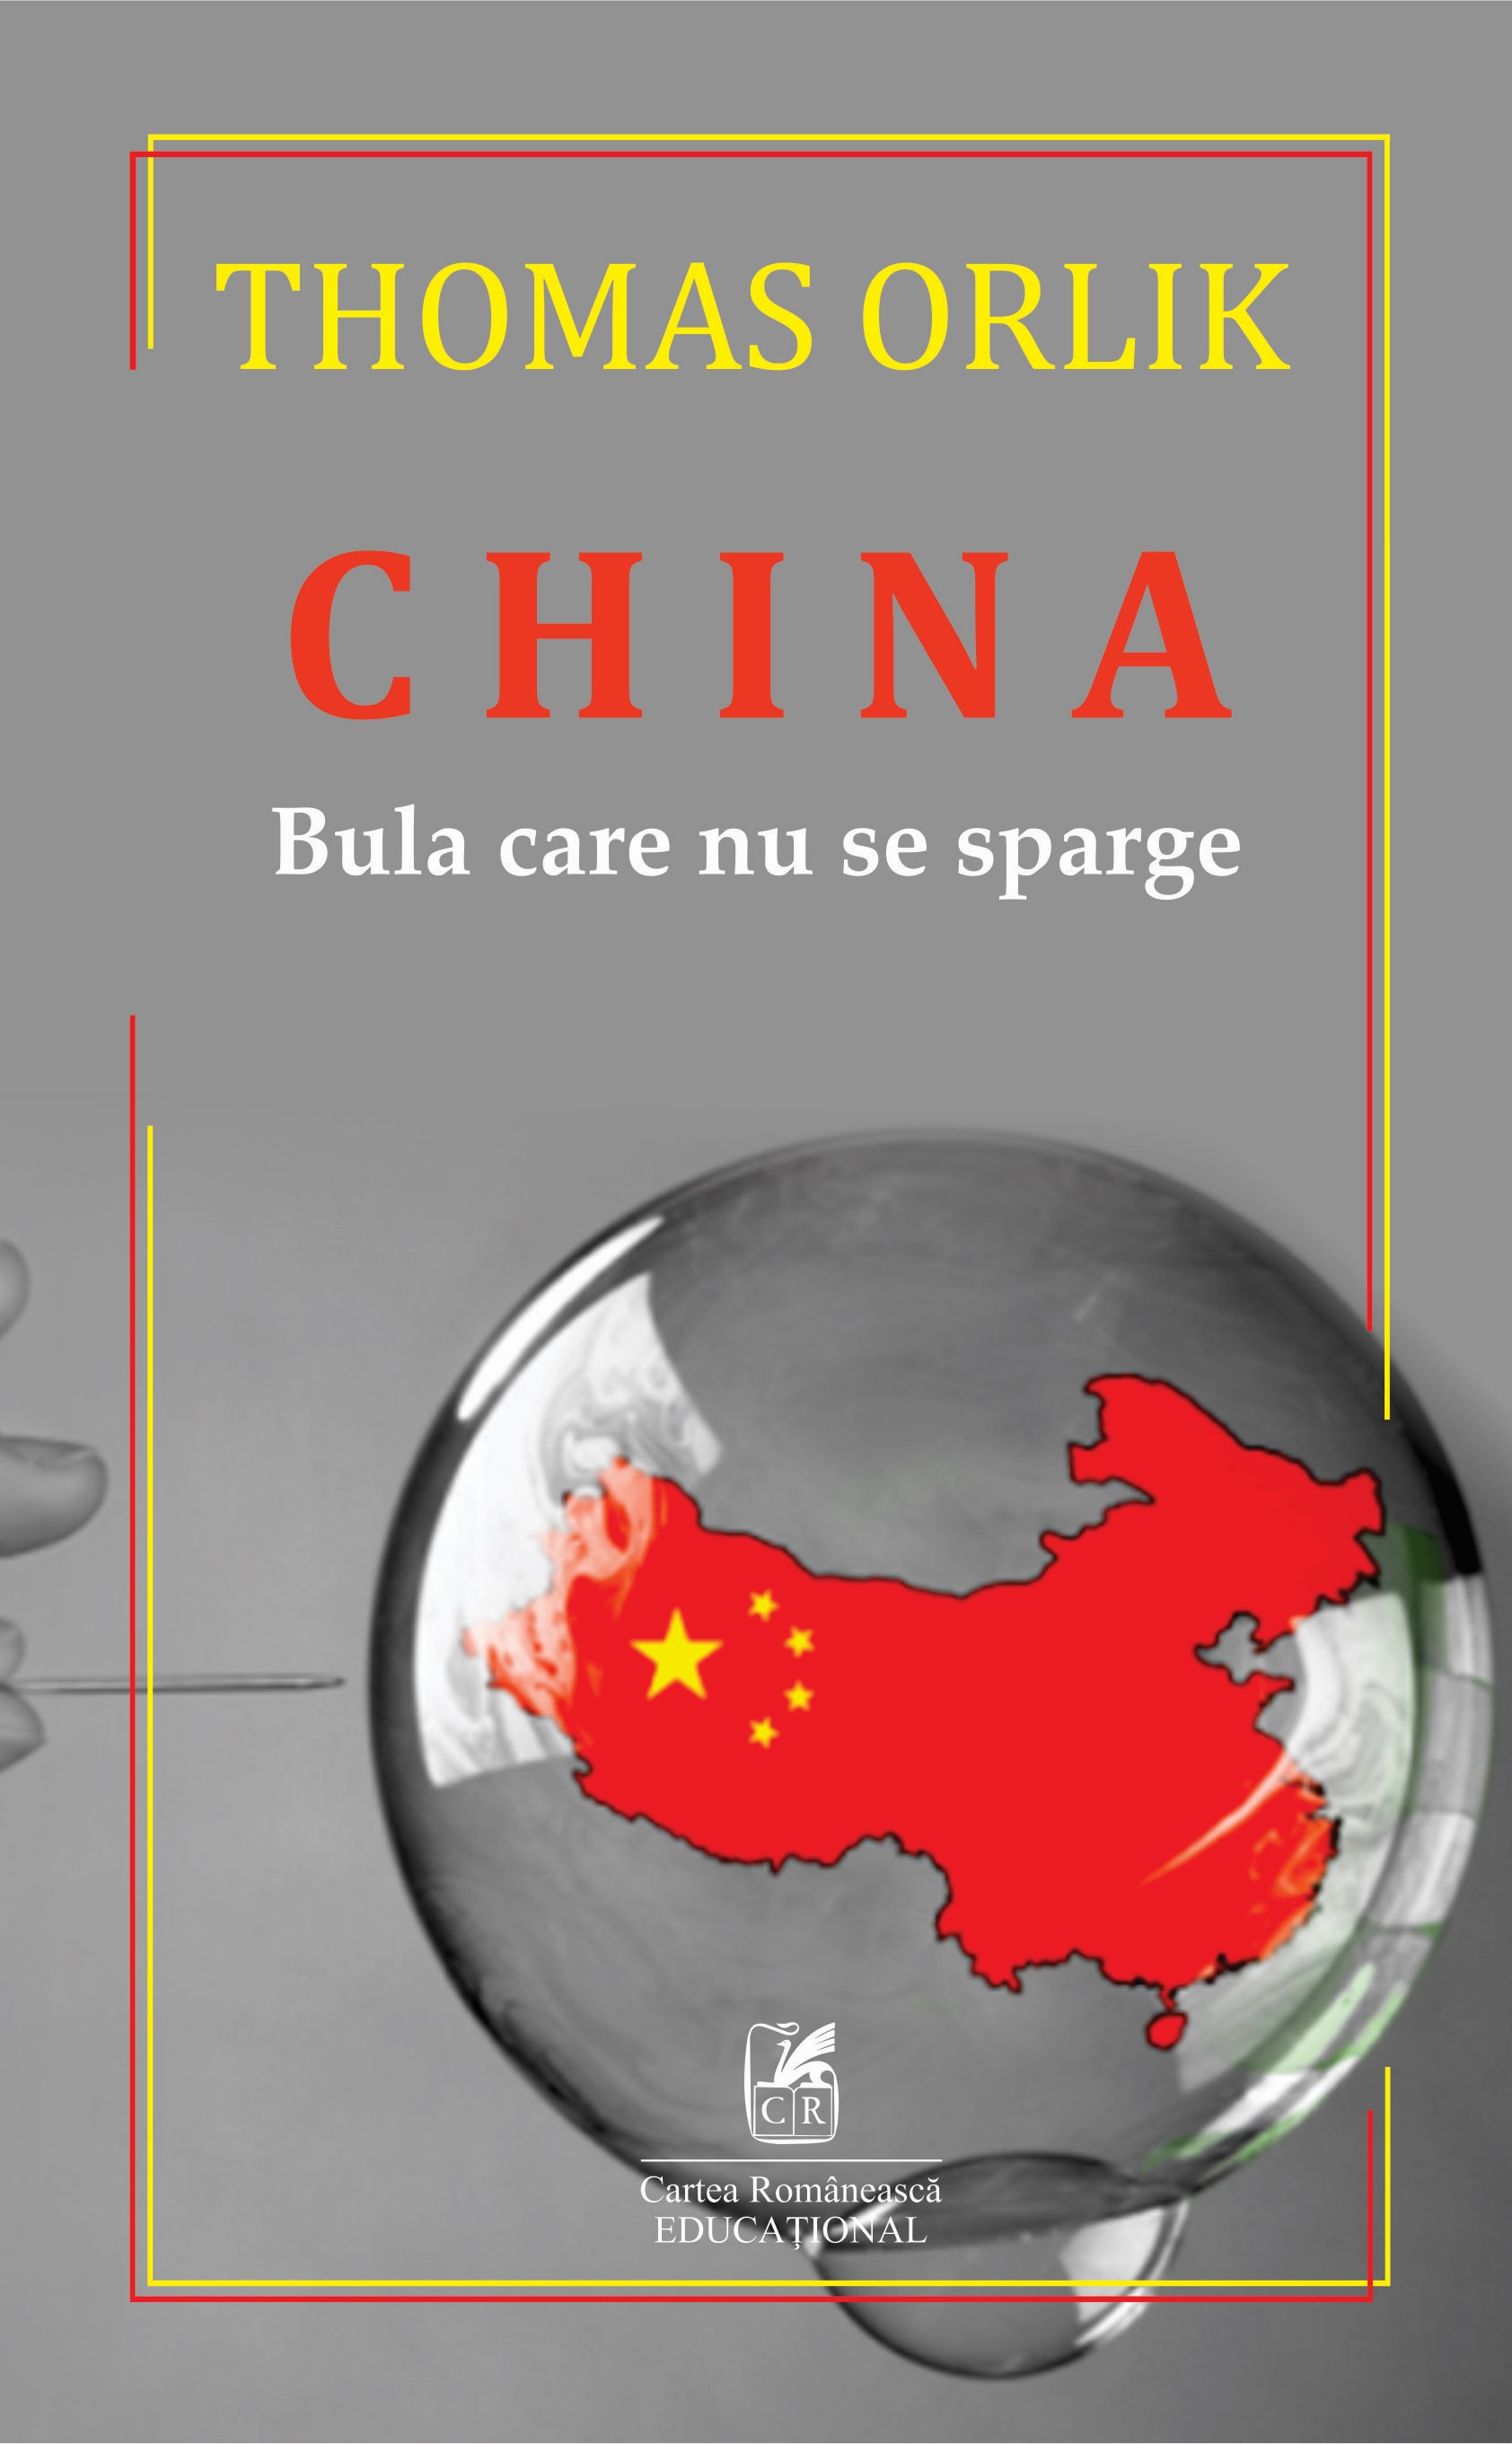 China | Thomas Orlik Cartea Romaneasca educational Carte